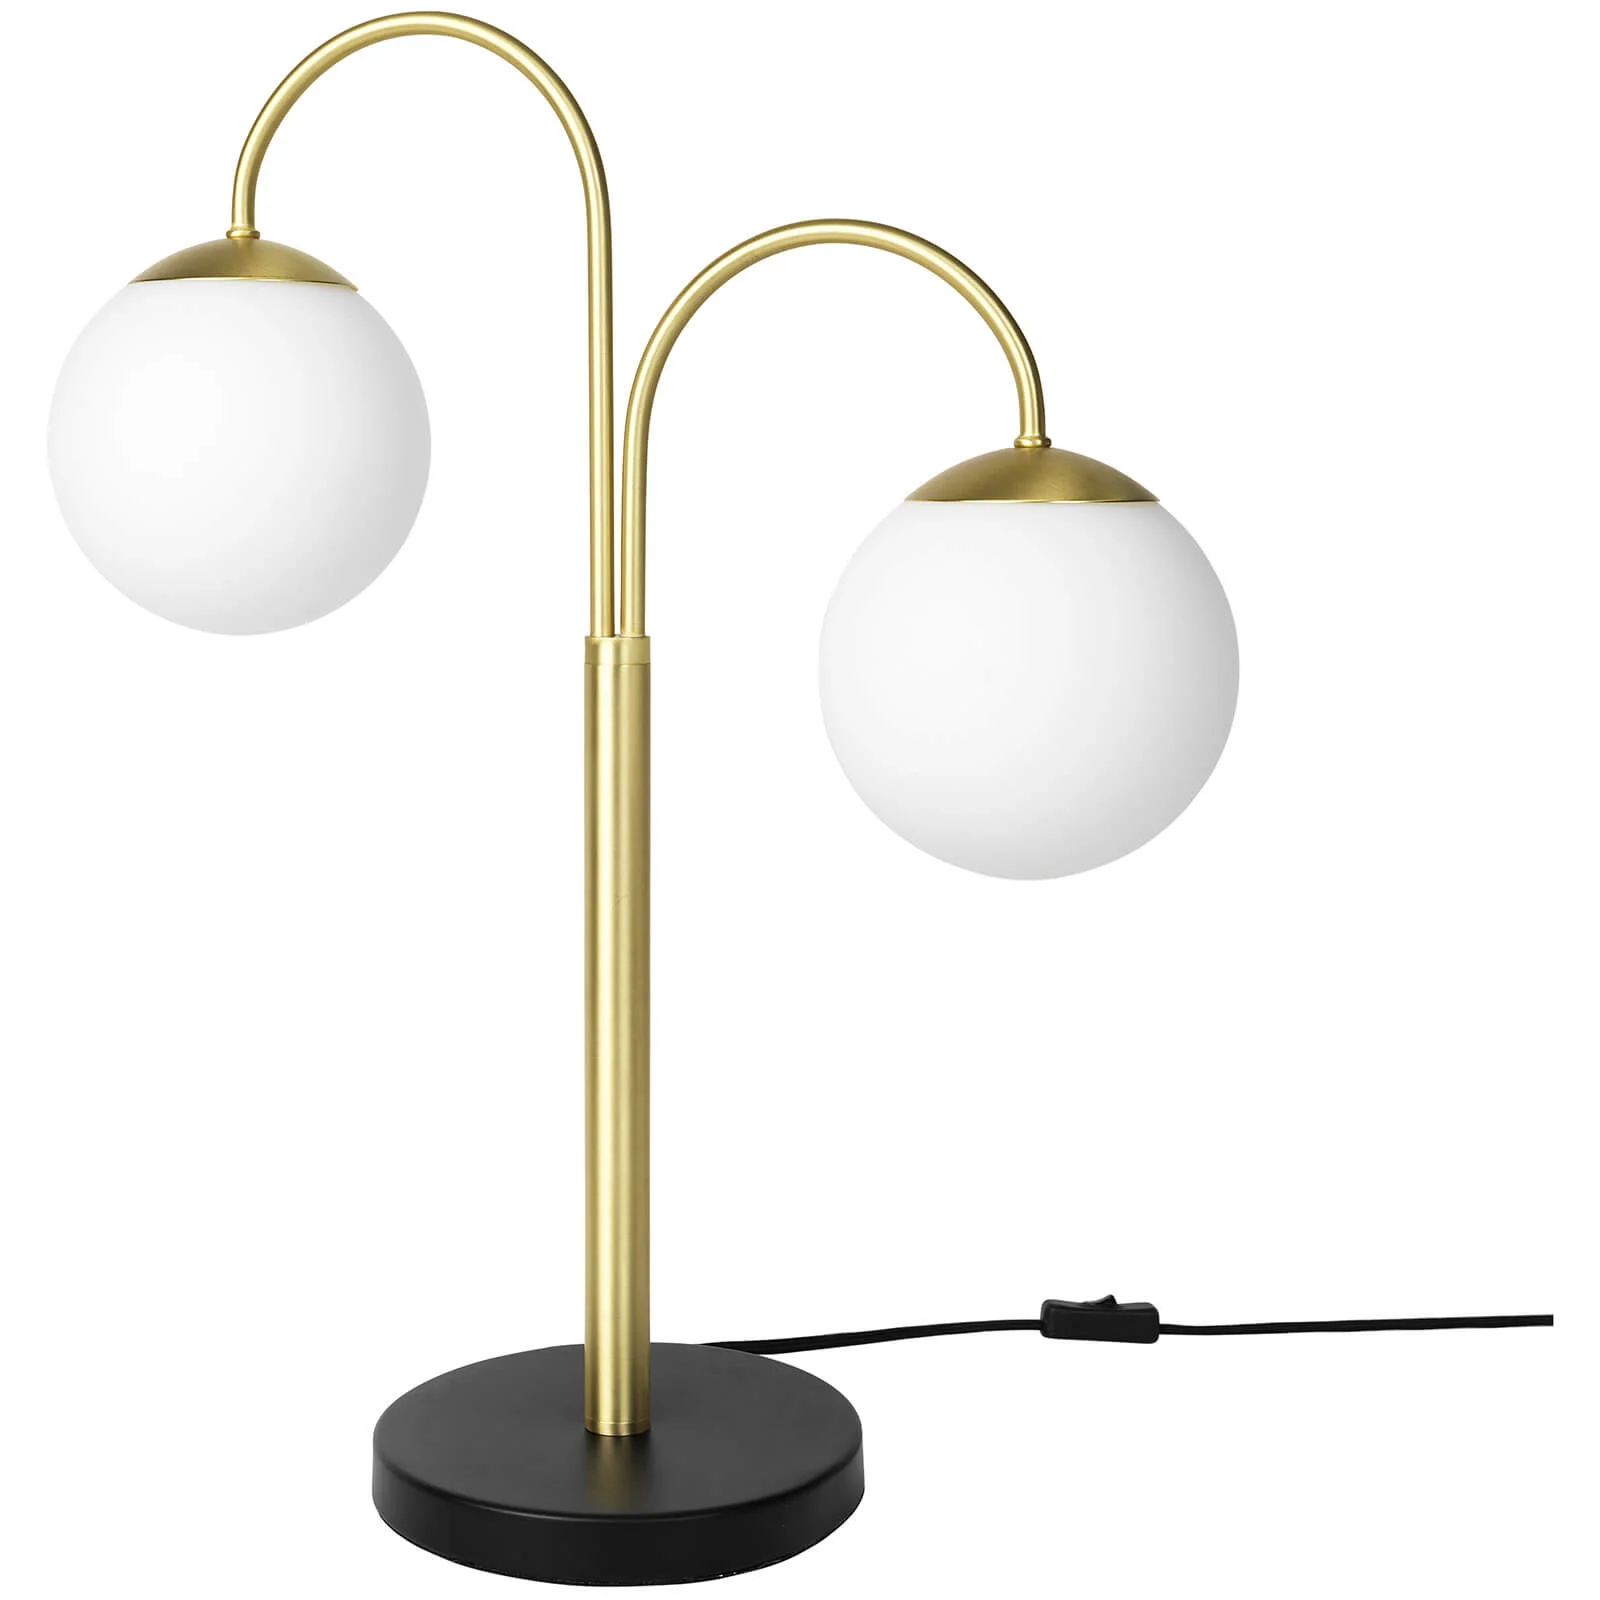 Broste Copenhagen Caspa Desk Lamp - Metal with Brass Finish Image 1